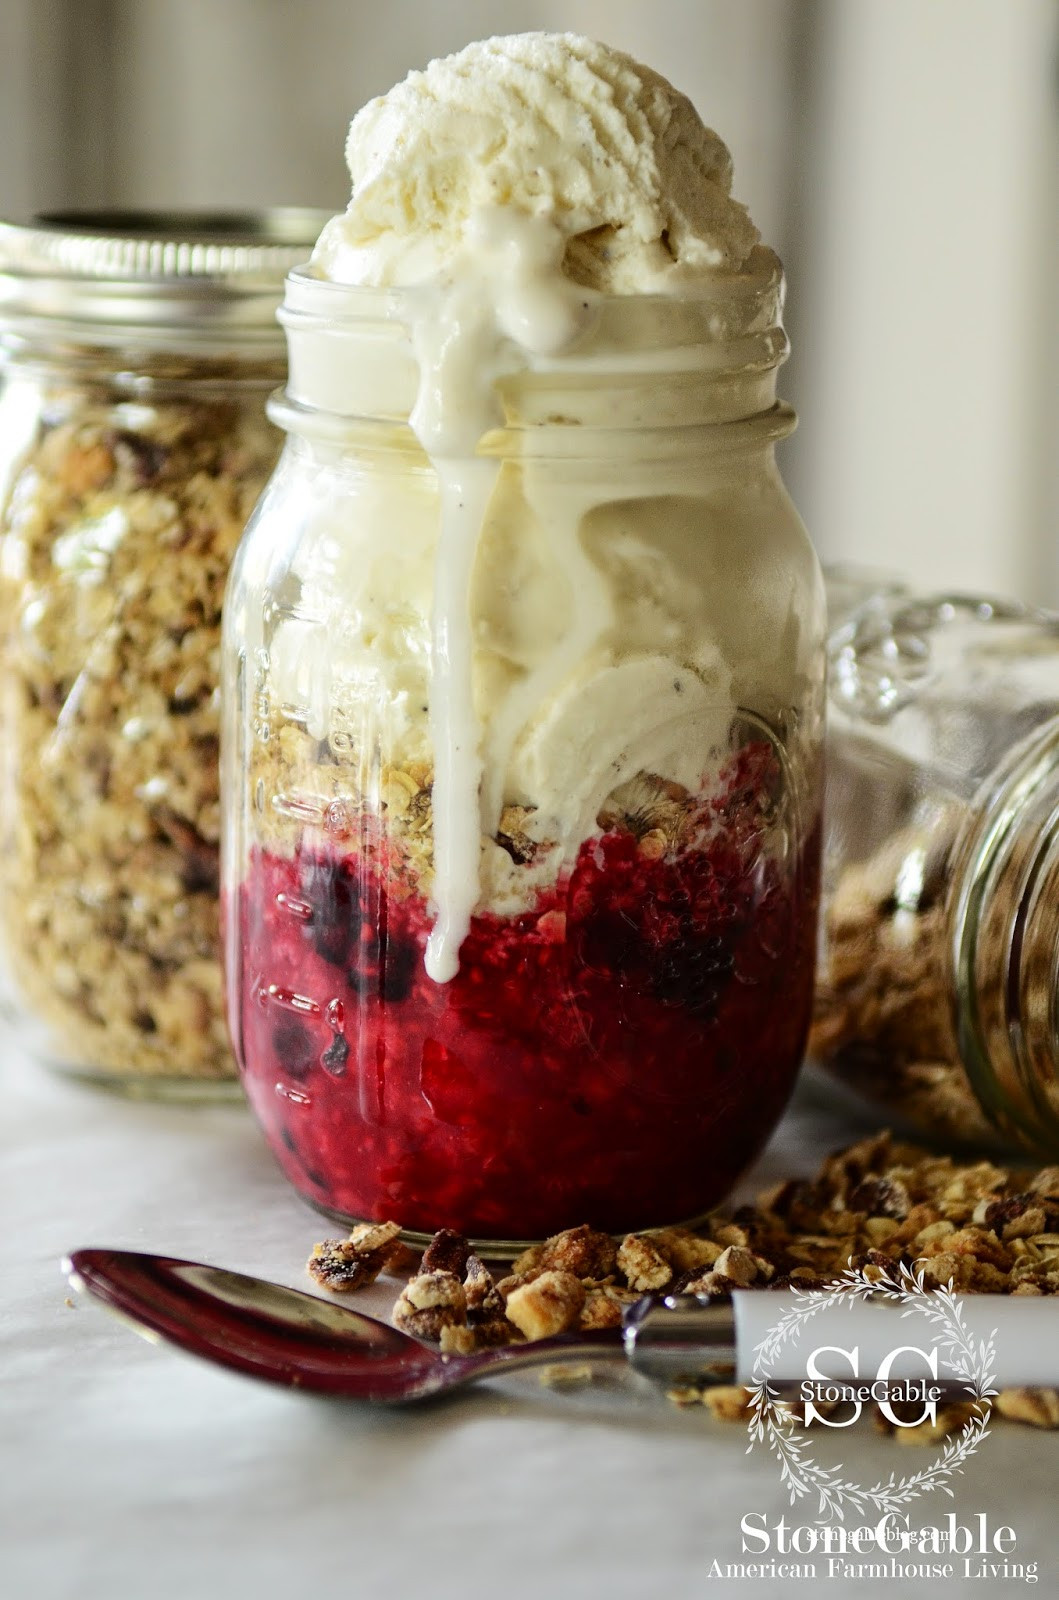 Easy Make Ahead Desserts
 BERRY CRISP IN A JAR… EASY MAKE AHEAD DESSERT